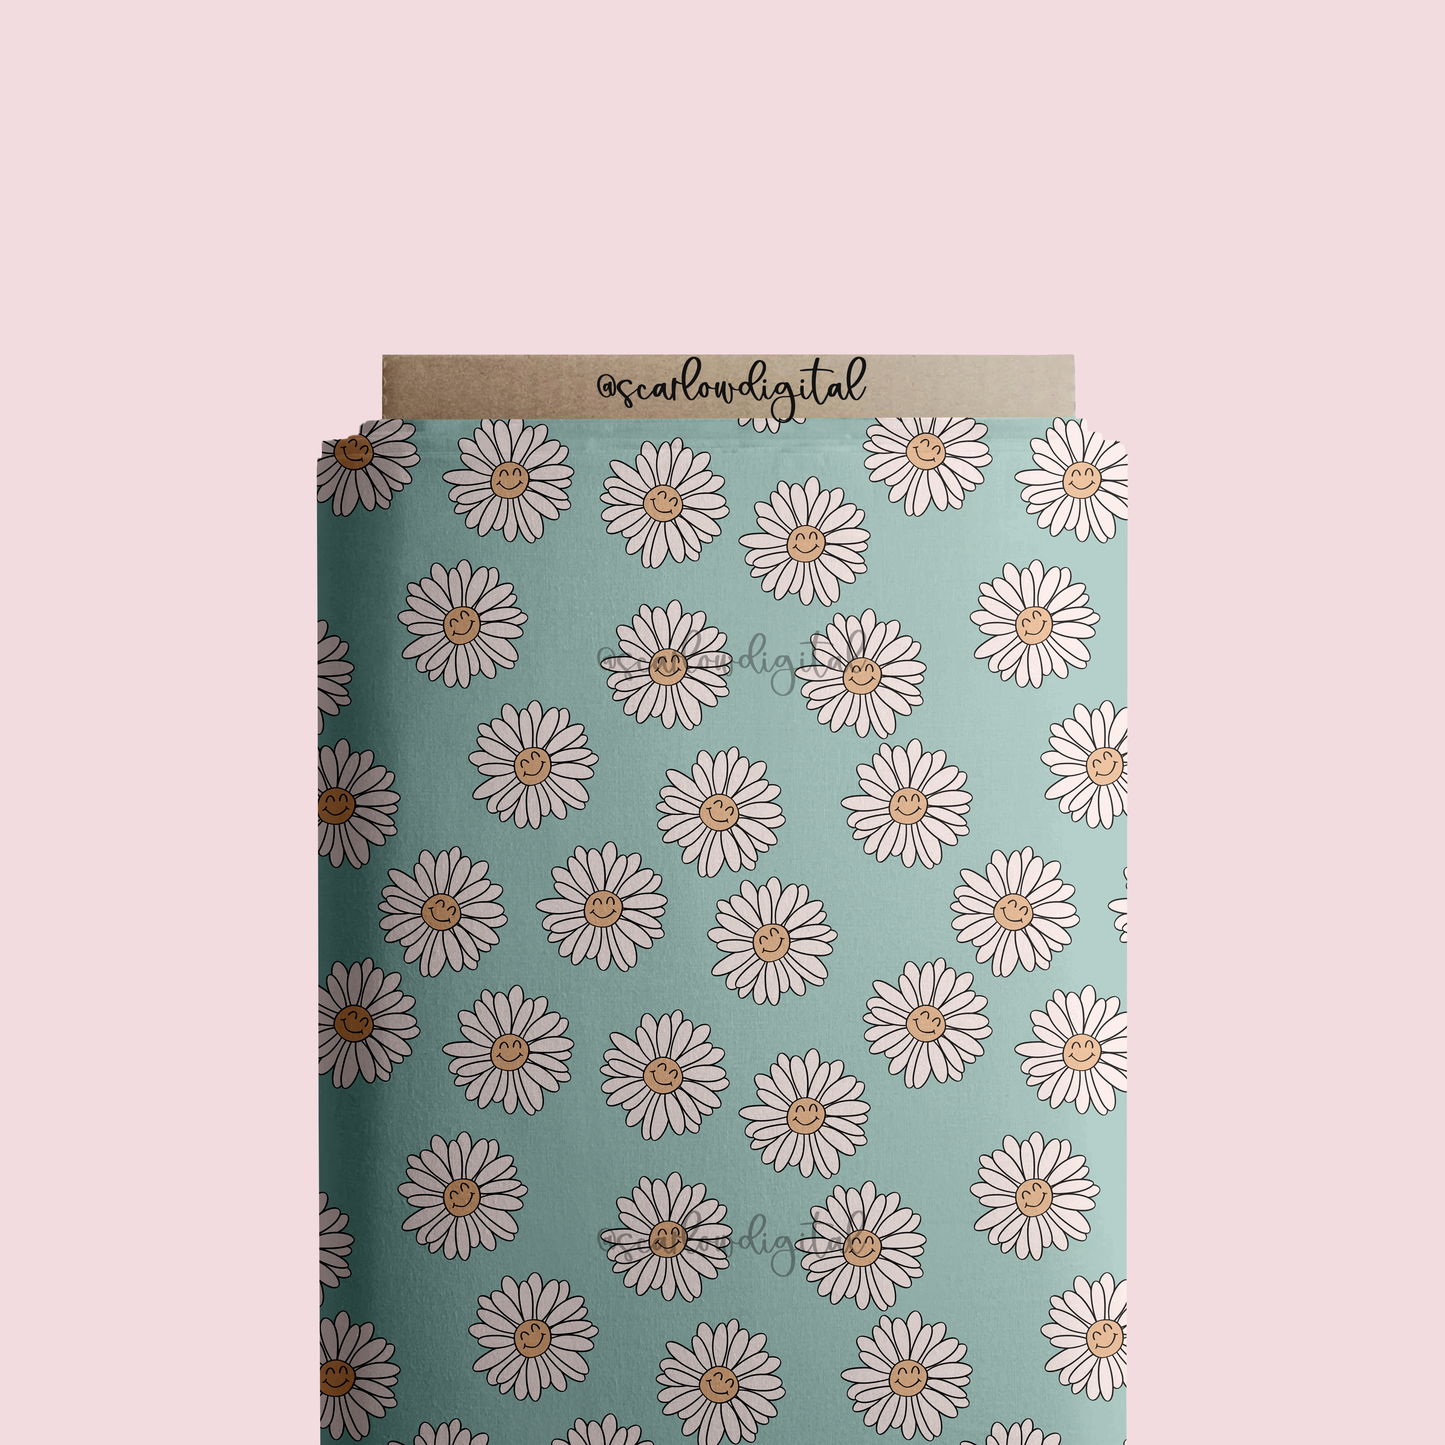 Happy Flowers Seamless Pattern-Boho Sublimation Digital Design Download-summer florals seamless file, smiling seamless, daisy seamless file